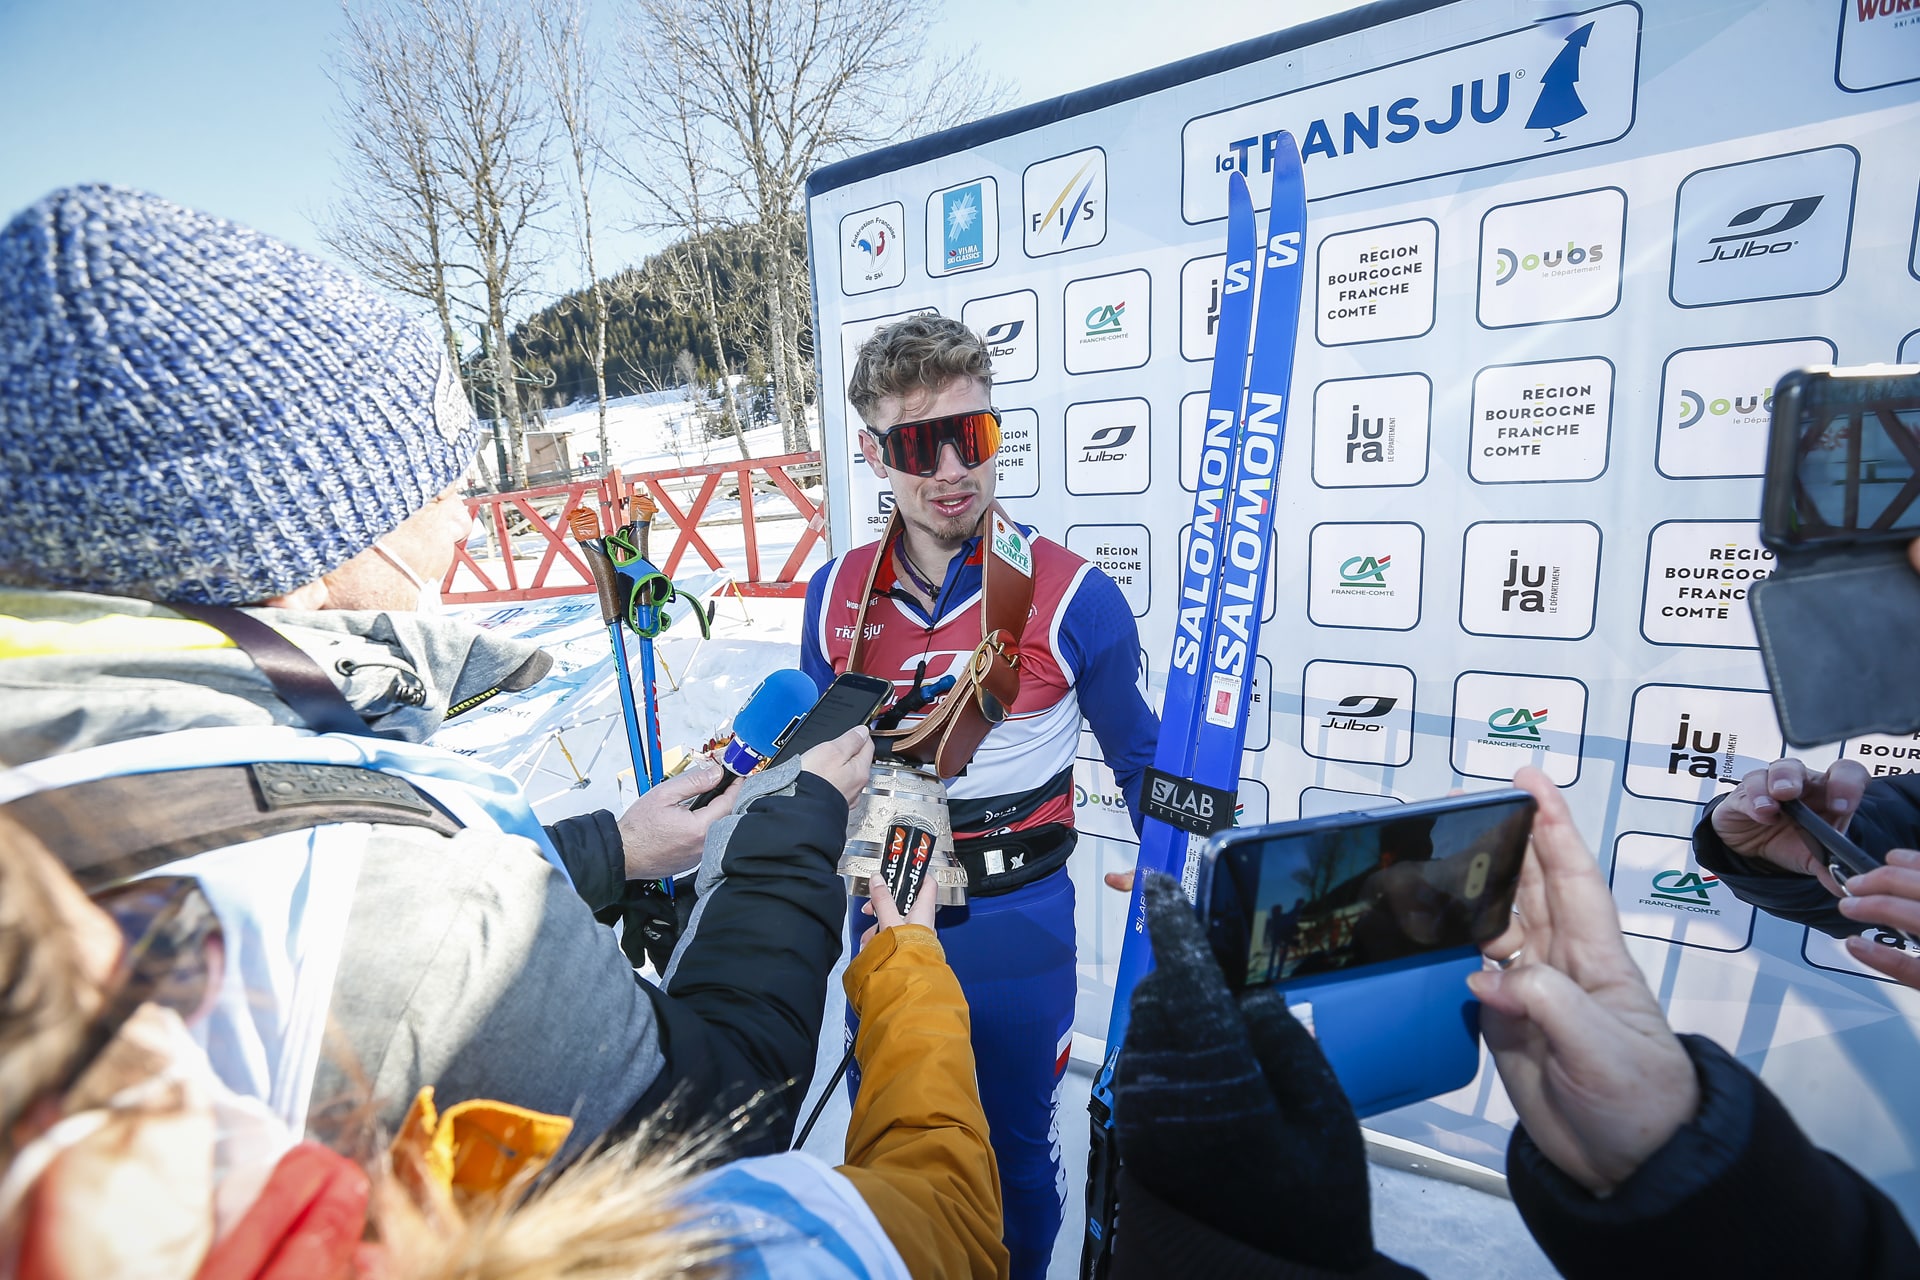 Salomon partner of the Transju cross-country ski race